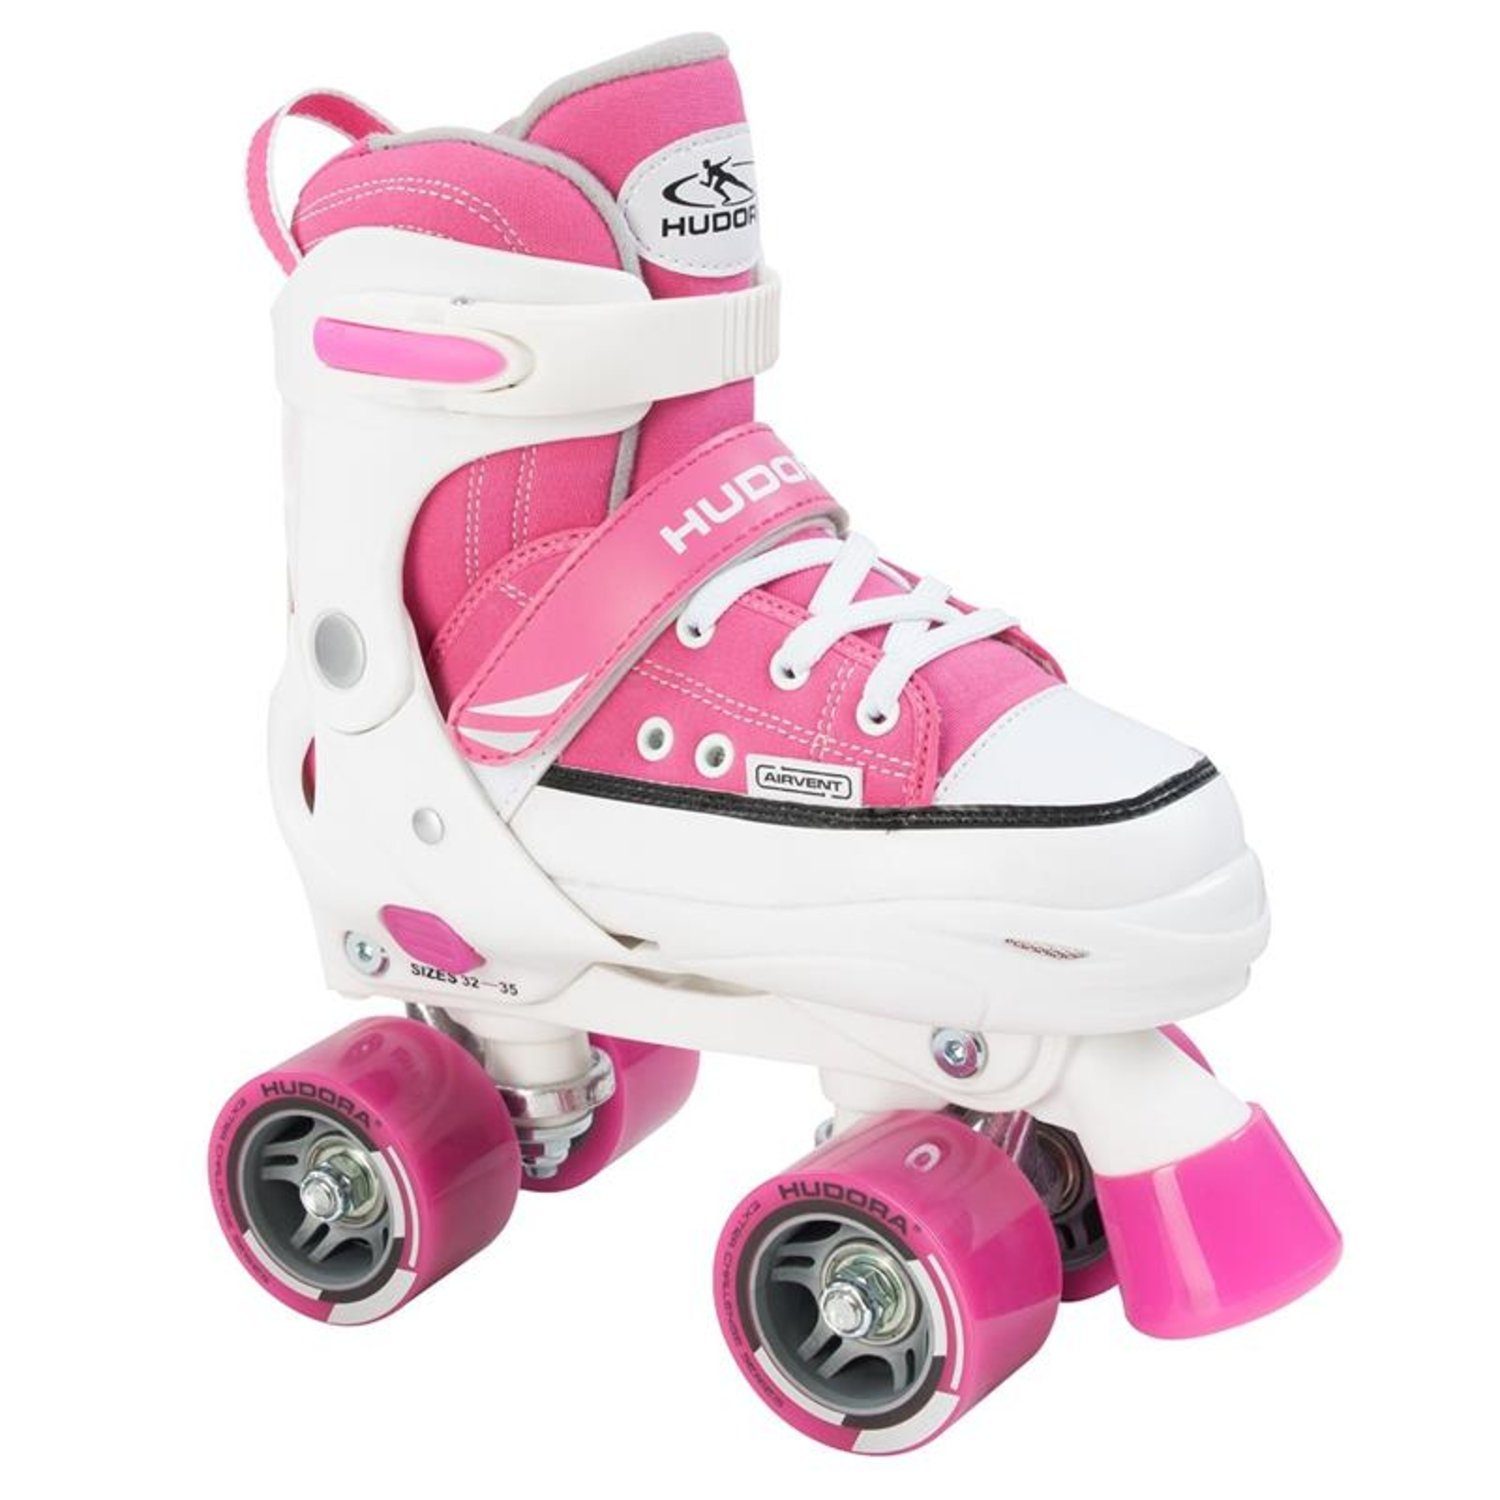 Hudora Inlineskates 22033 Roller Skate, pink, verstellbar Gr. 28-31